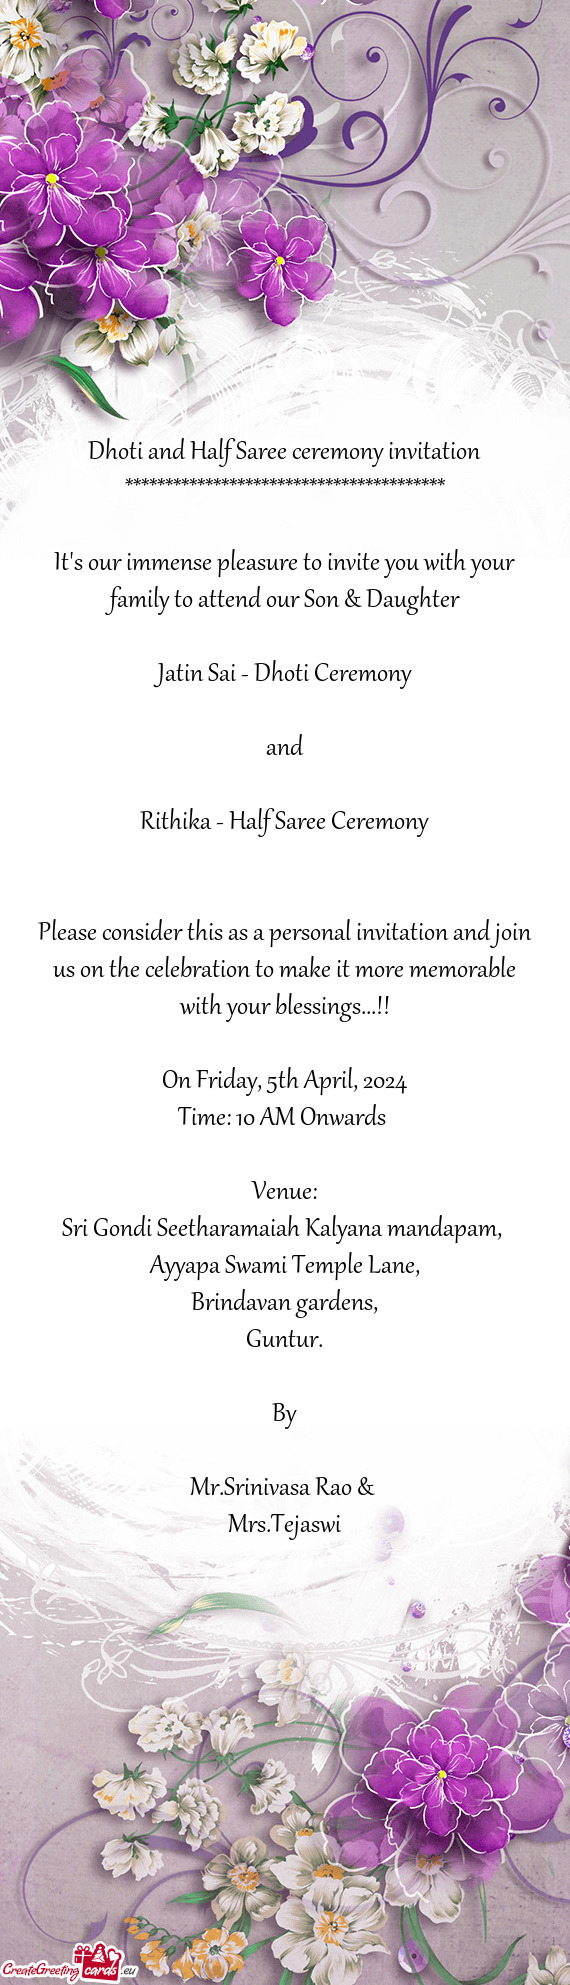 Rithika - Half Saree Ceremony